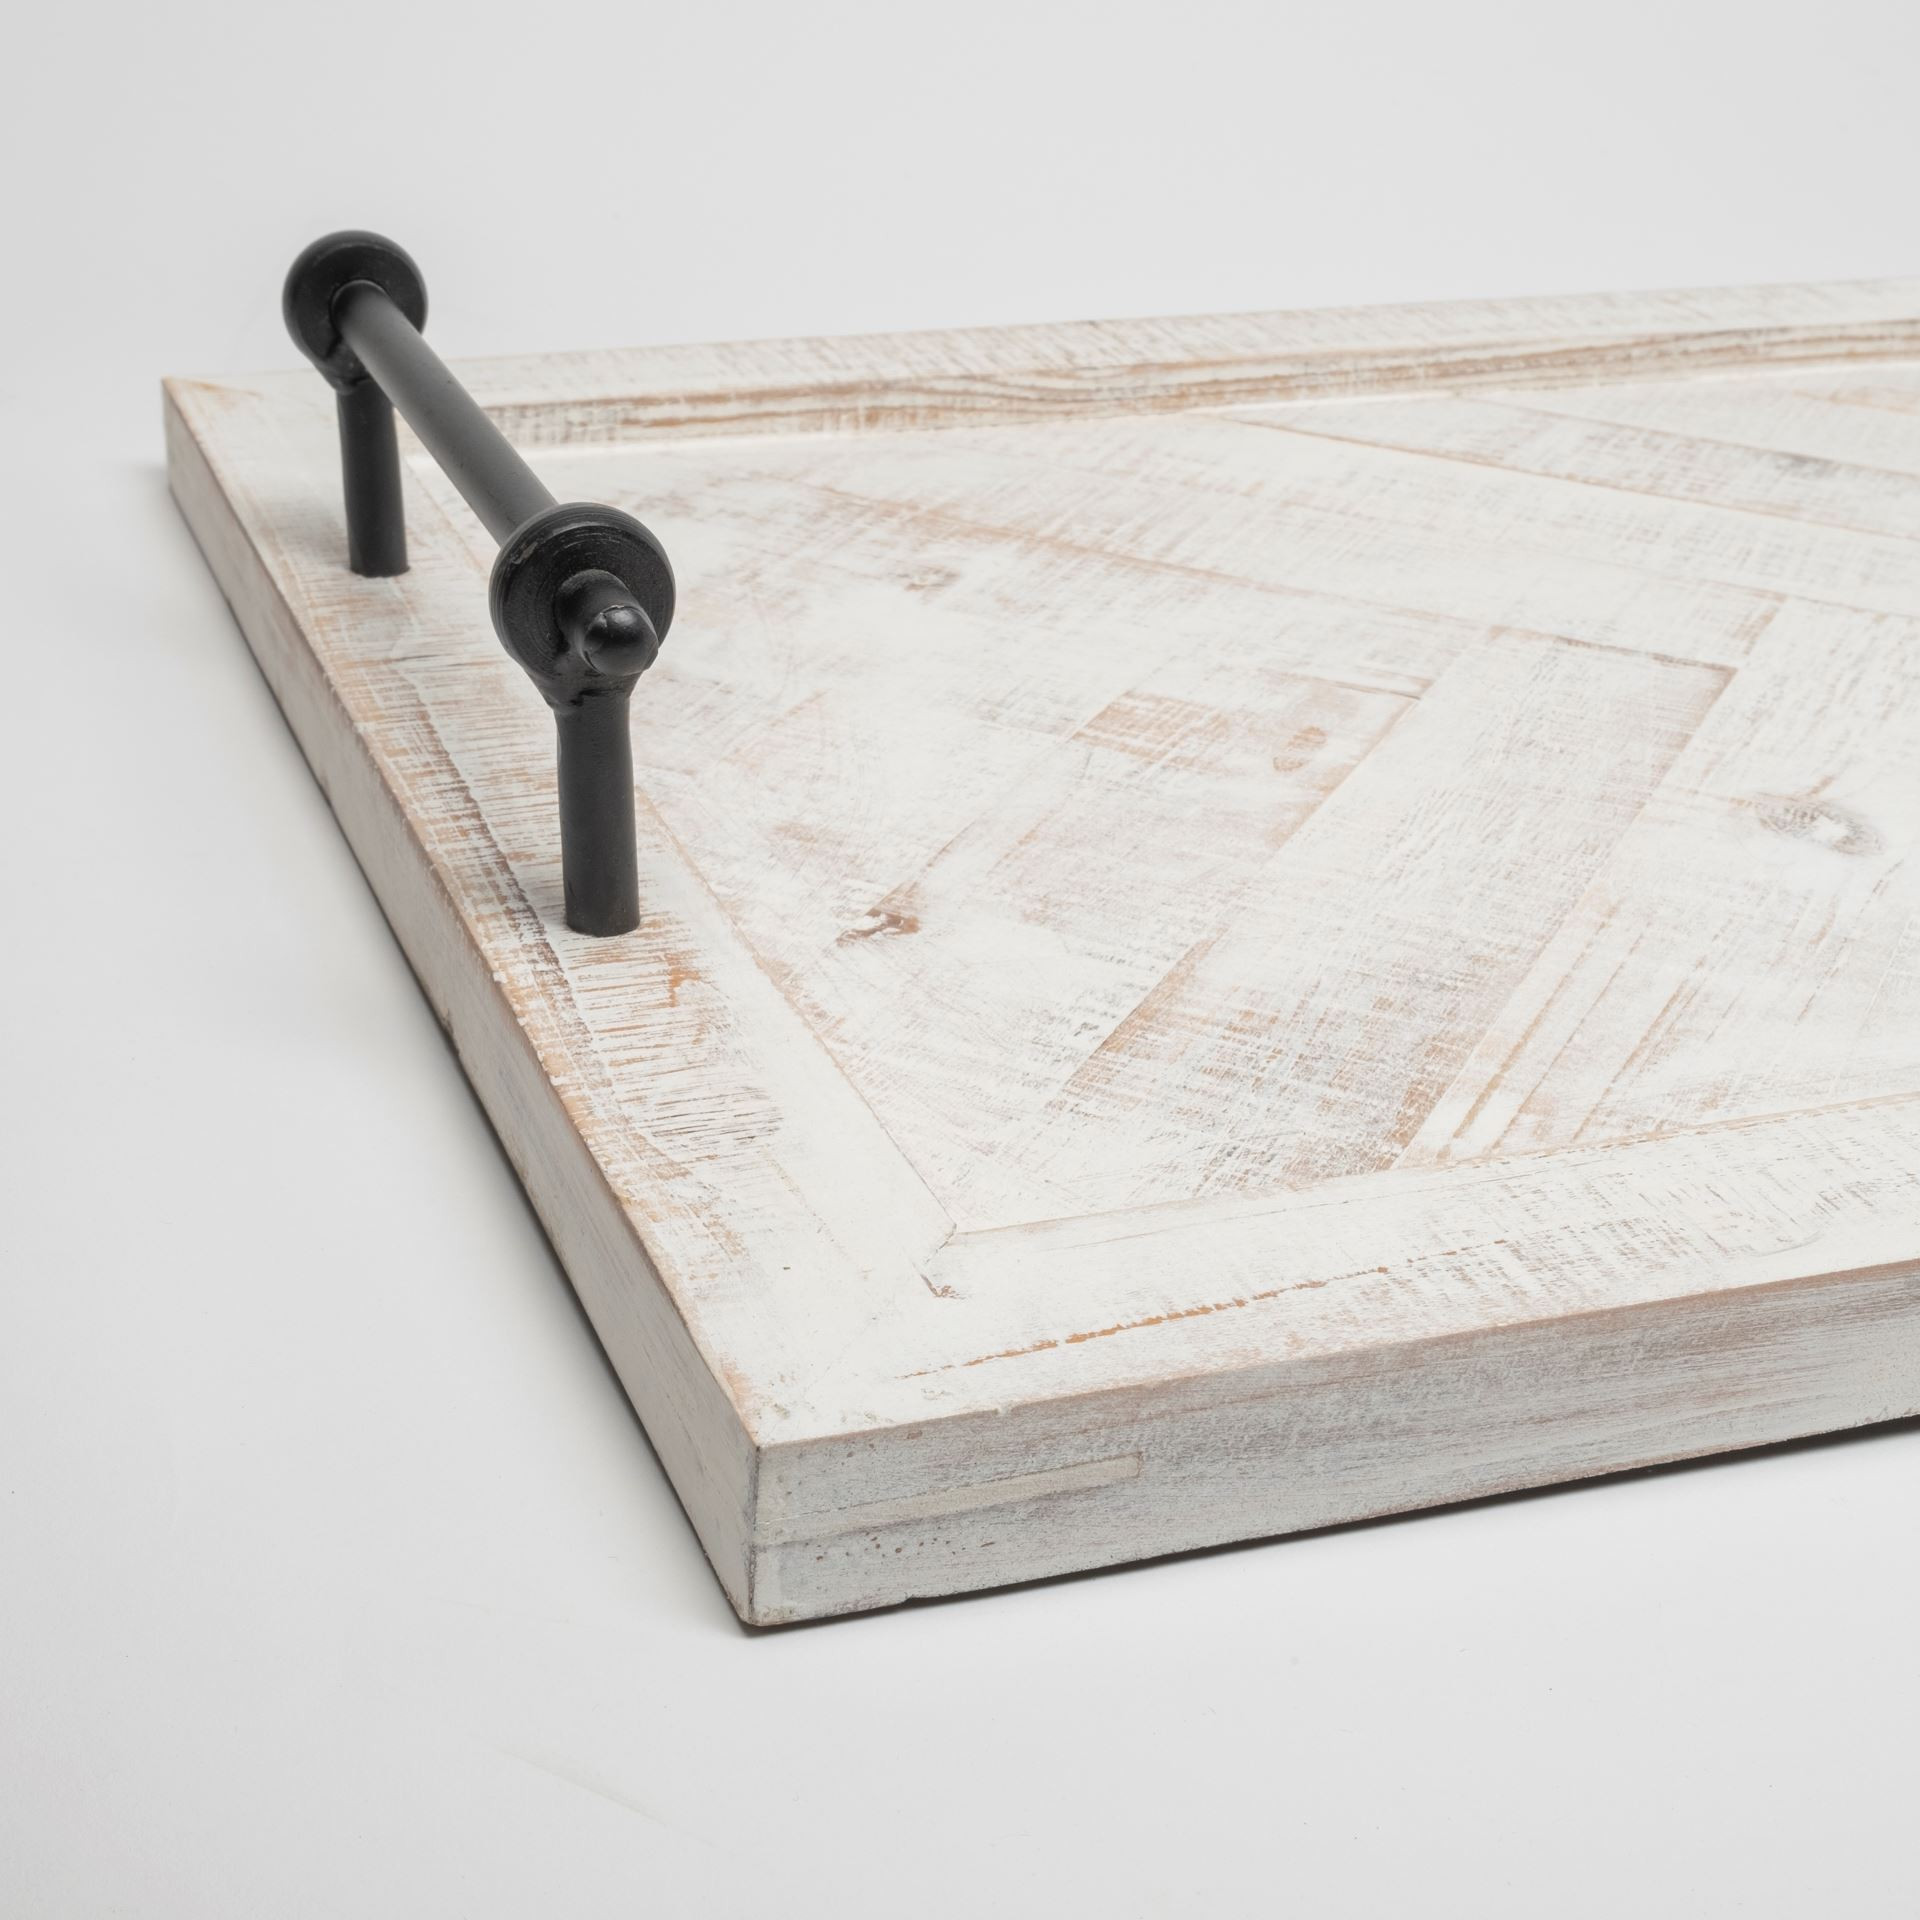 Whitewashed Tone Wood With Herringbone Pattern With Metal Raised Edges Tray